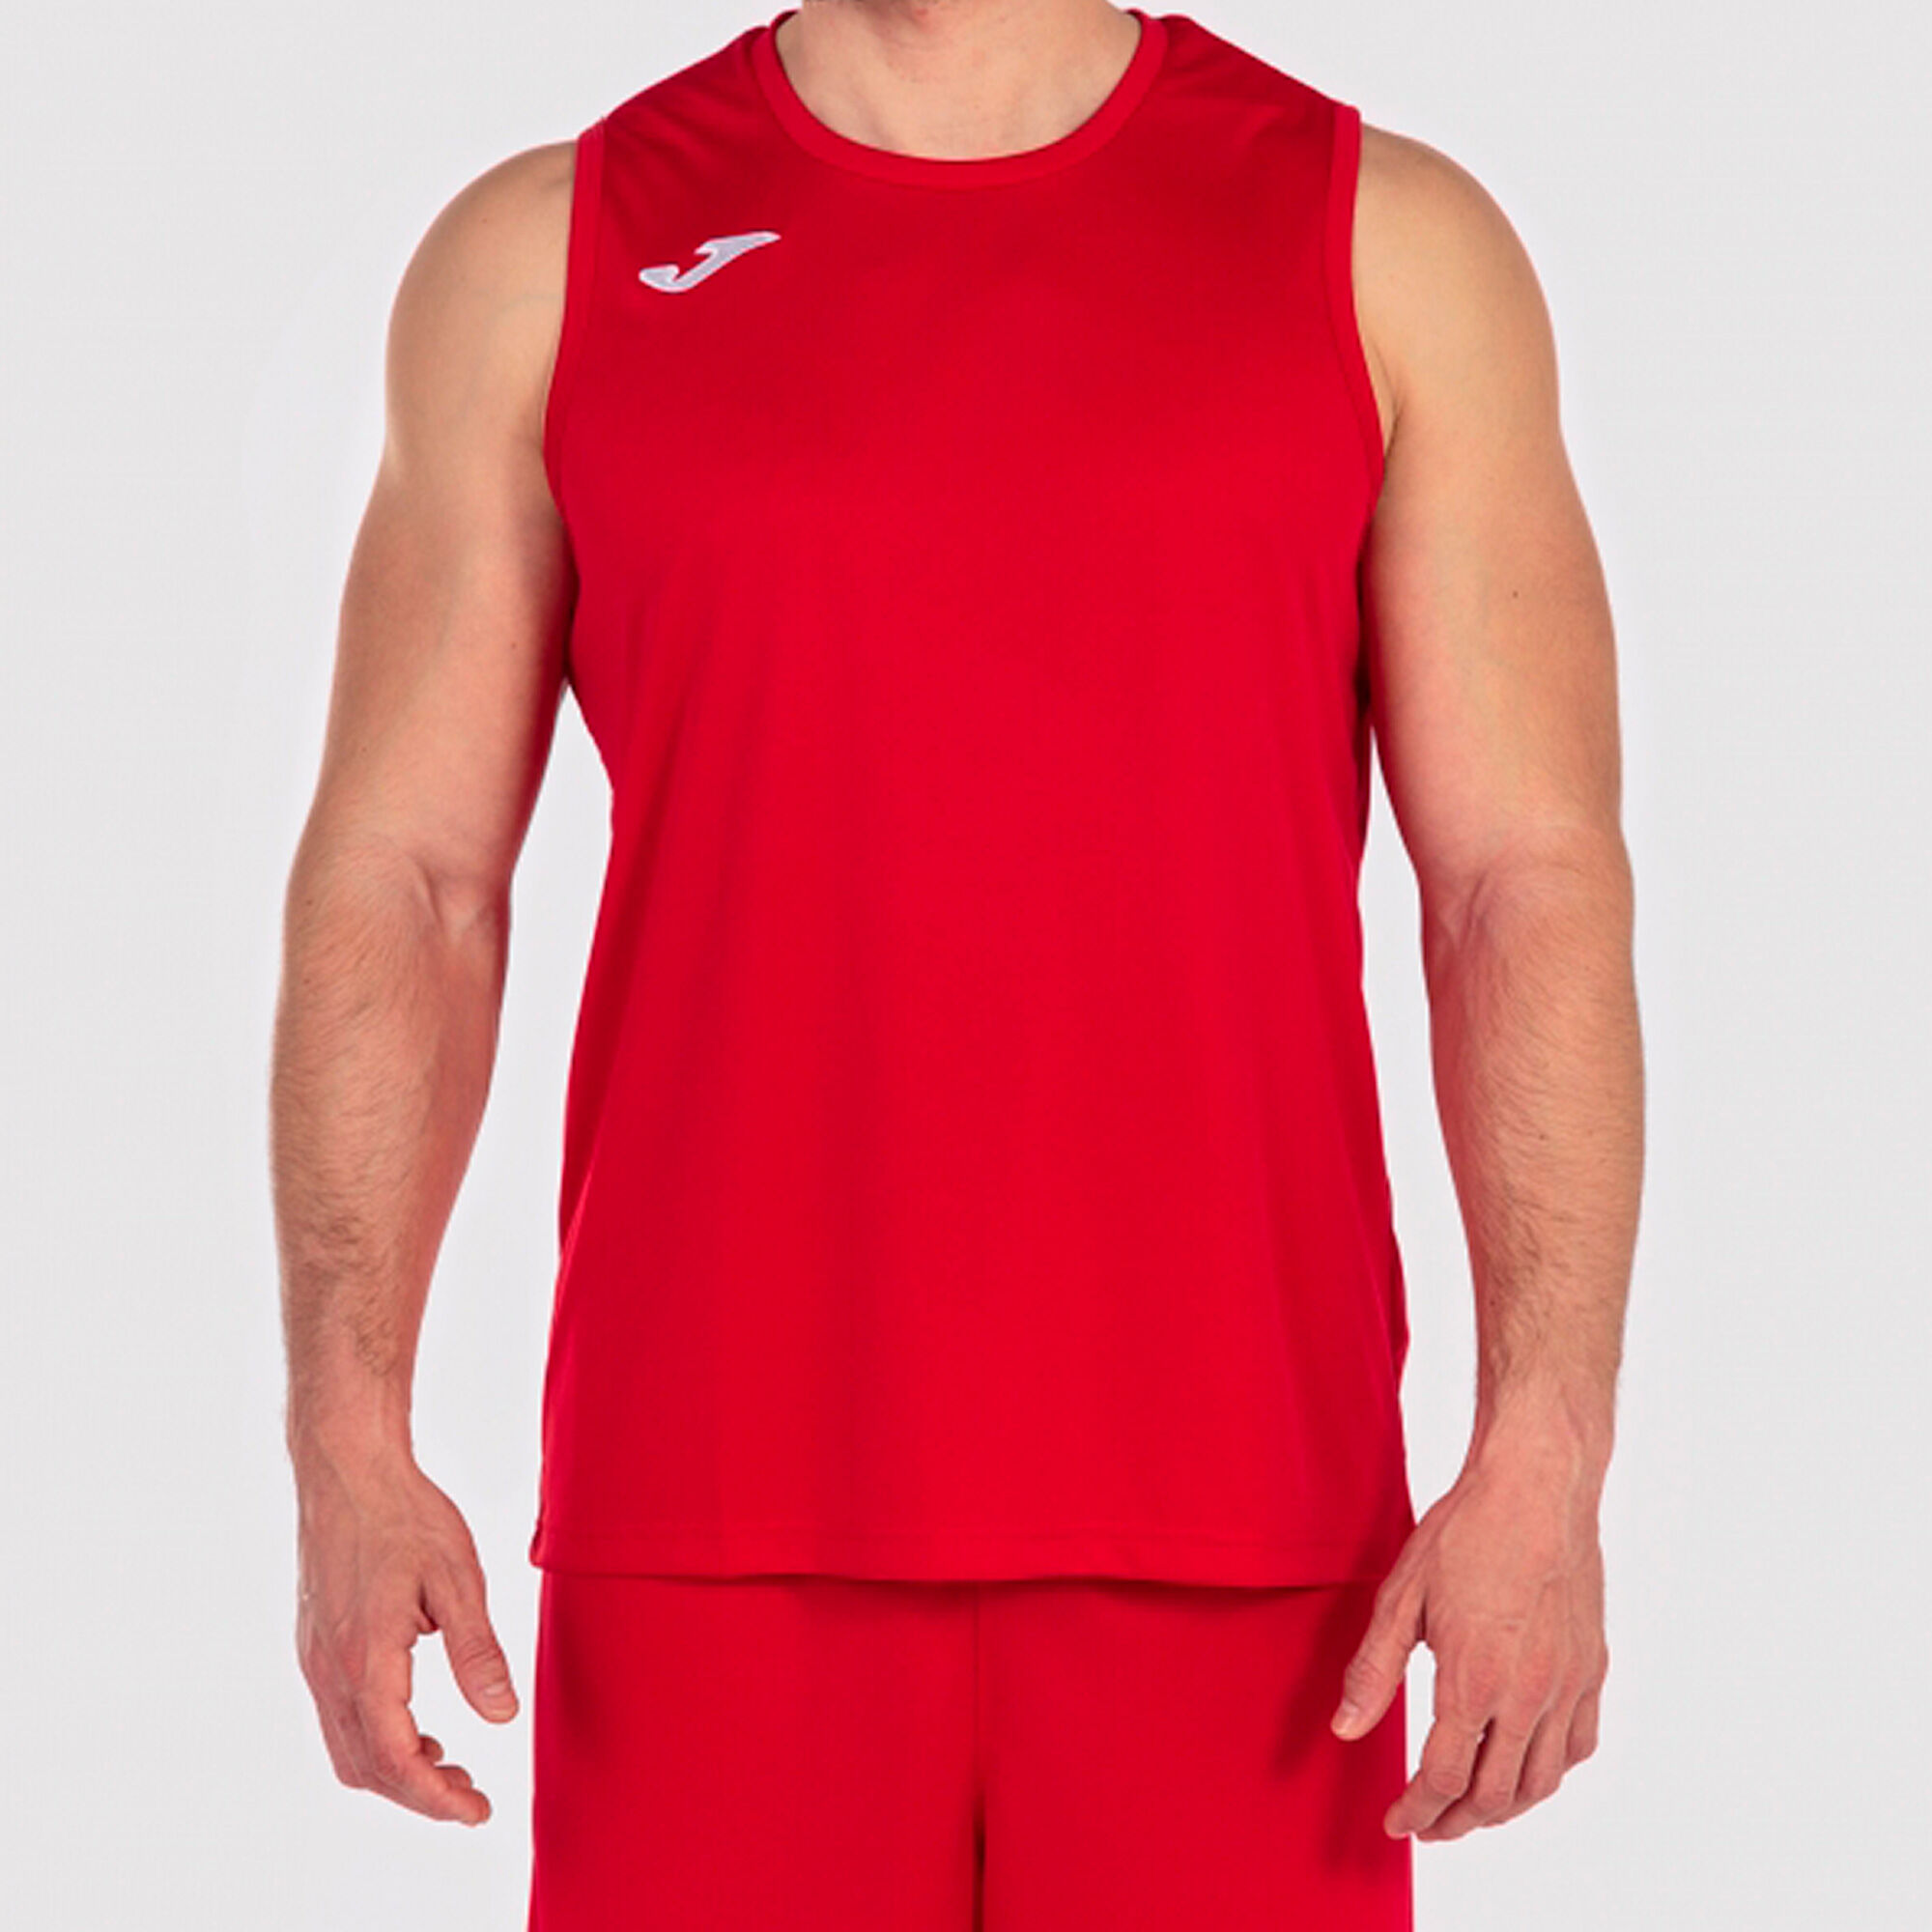 Camiseta sin mangas hombre Combi Basket rojo